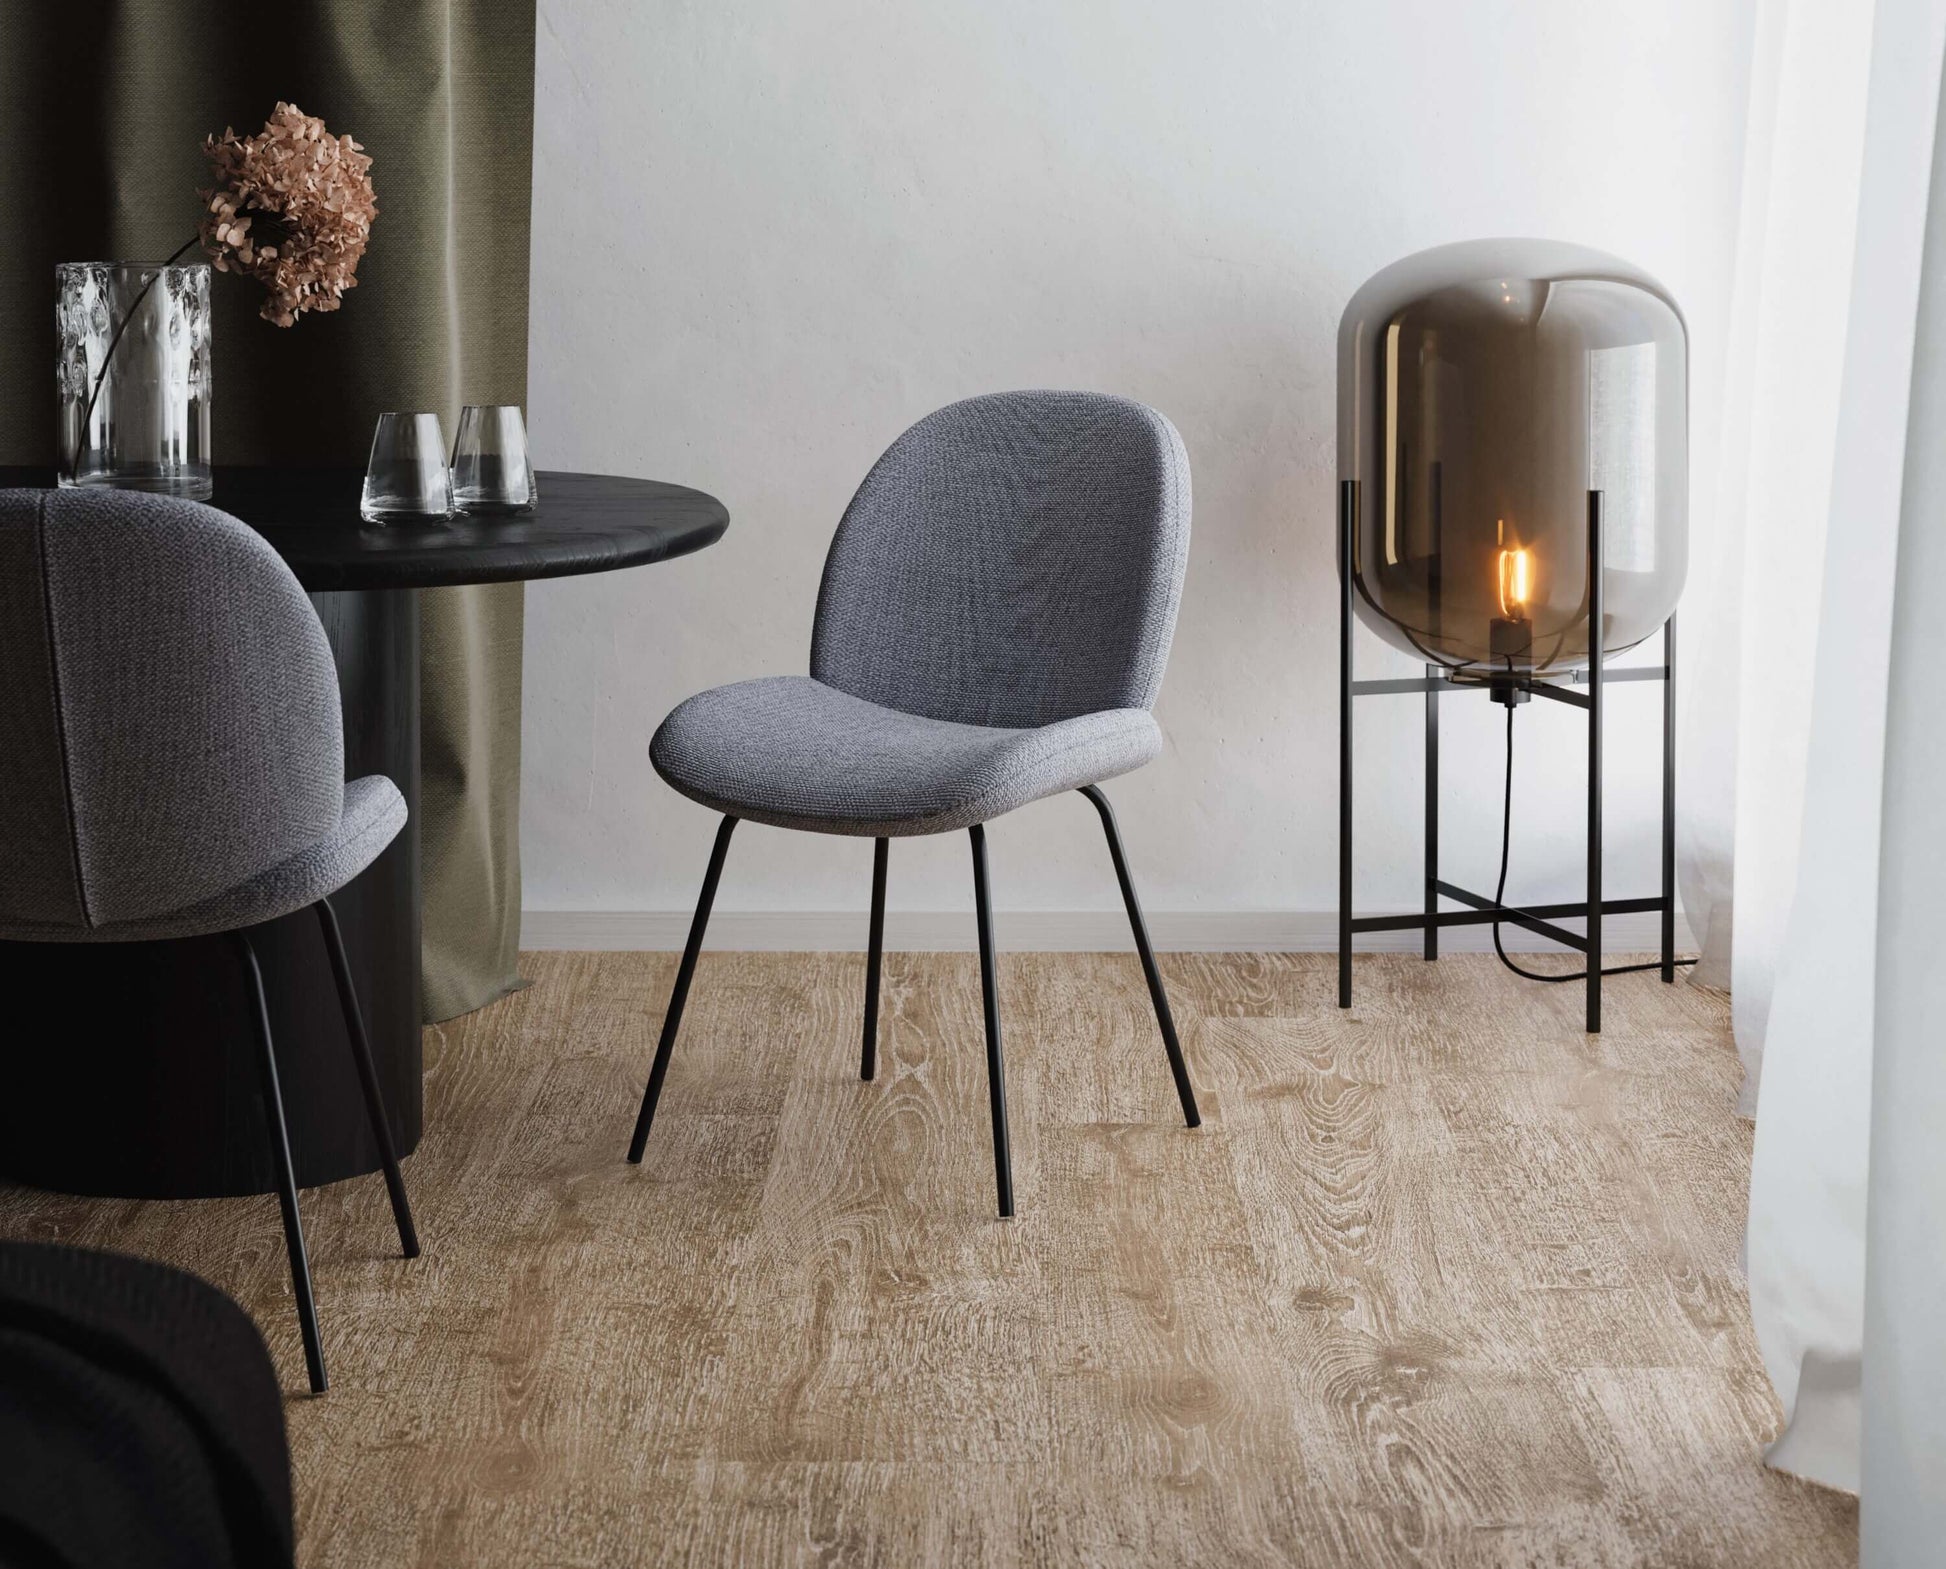 Copenhagen | Scandinavian Fabric Dark Grey Dining Chairs | Set Of 2 | Dark Grey